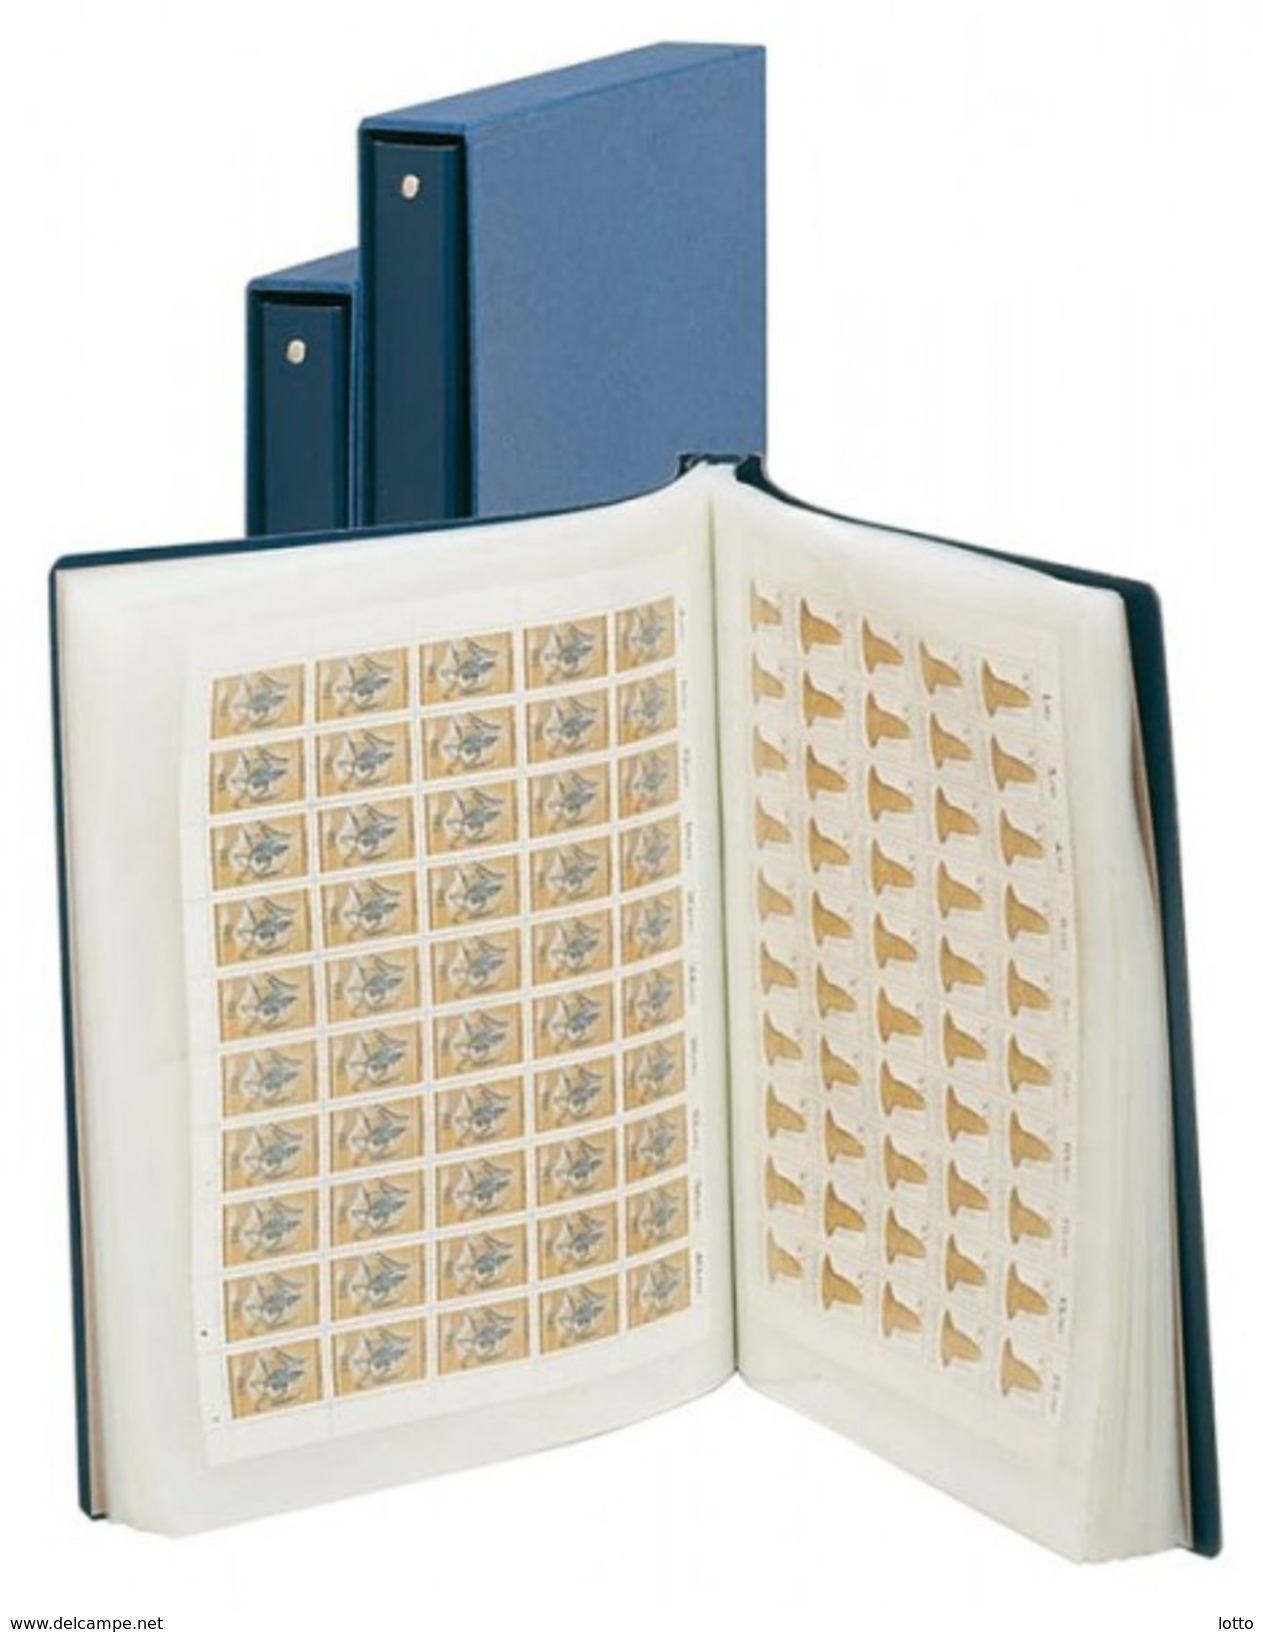 Lindner Bogenalbum, 280 X 325 X 32 Mm (ohne Kassette), Empf. VP 45,50 +++ NEU OVP +++ (860) - Alben Leer